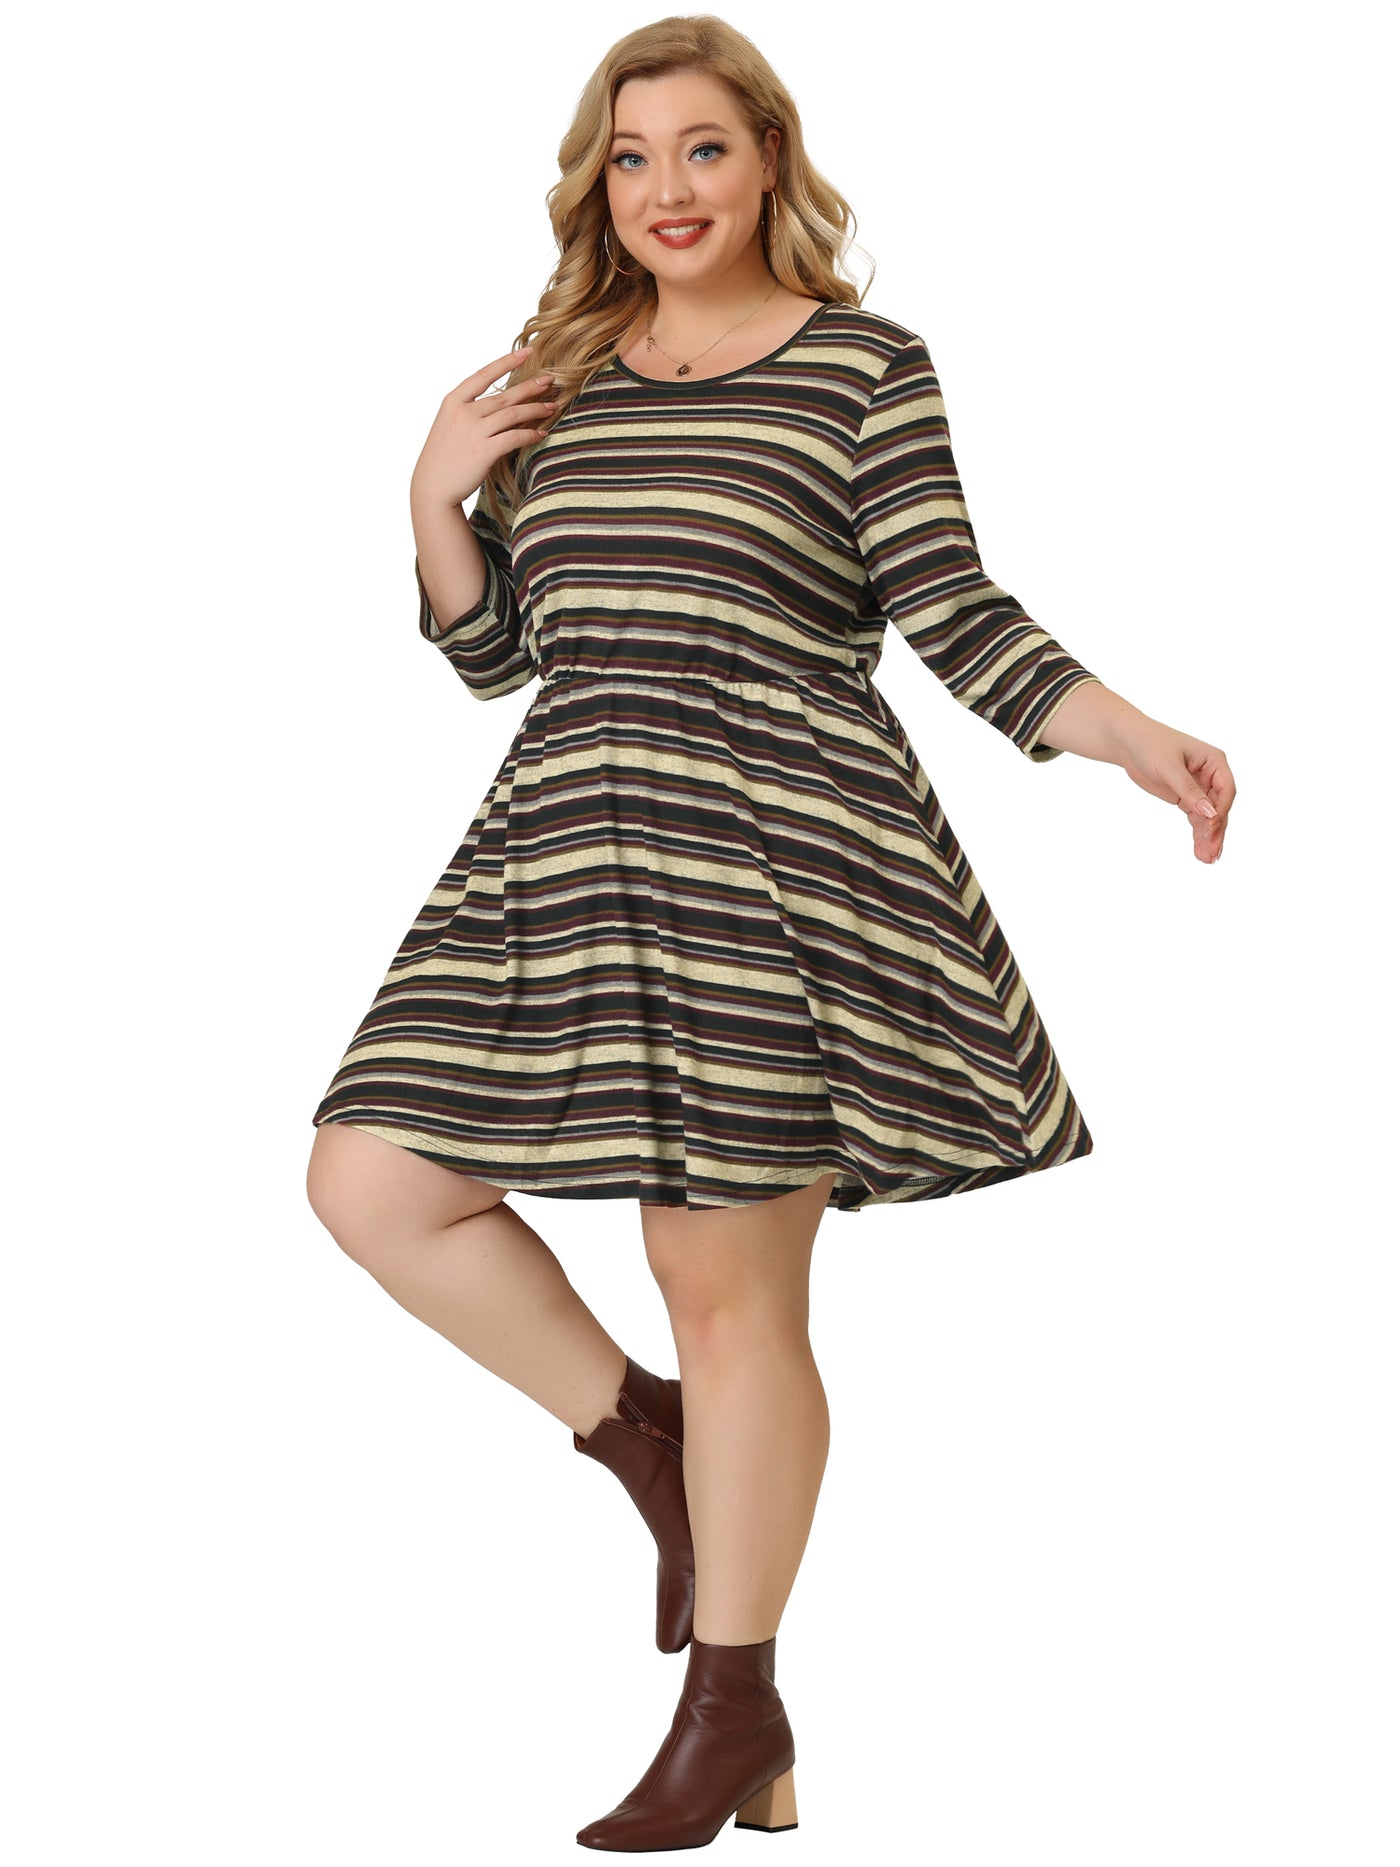 Bublédon Plus Size Casual Boho Round Neck Striped Dress